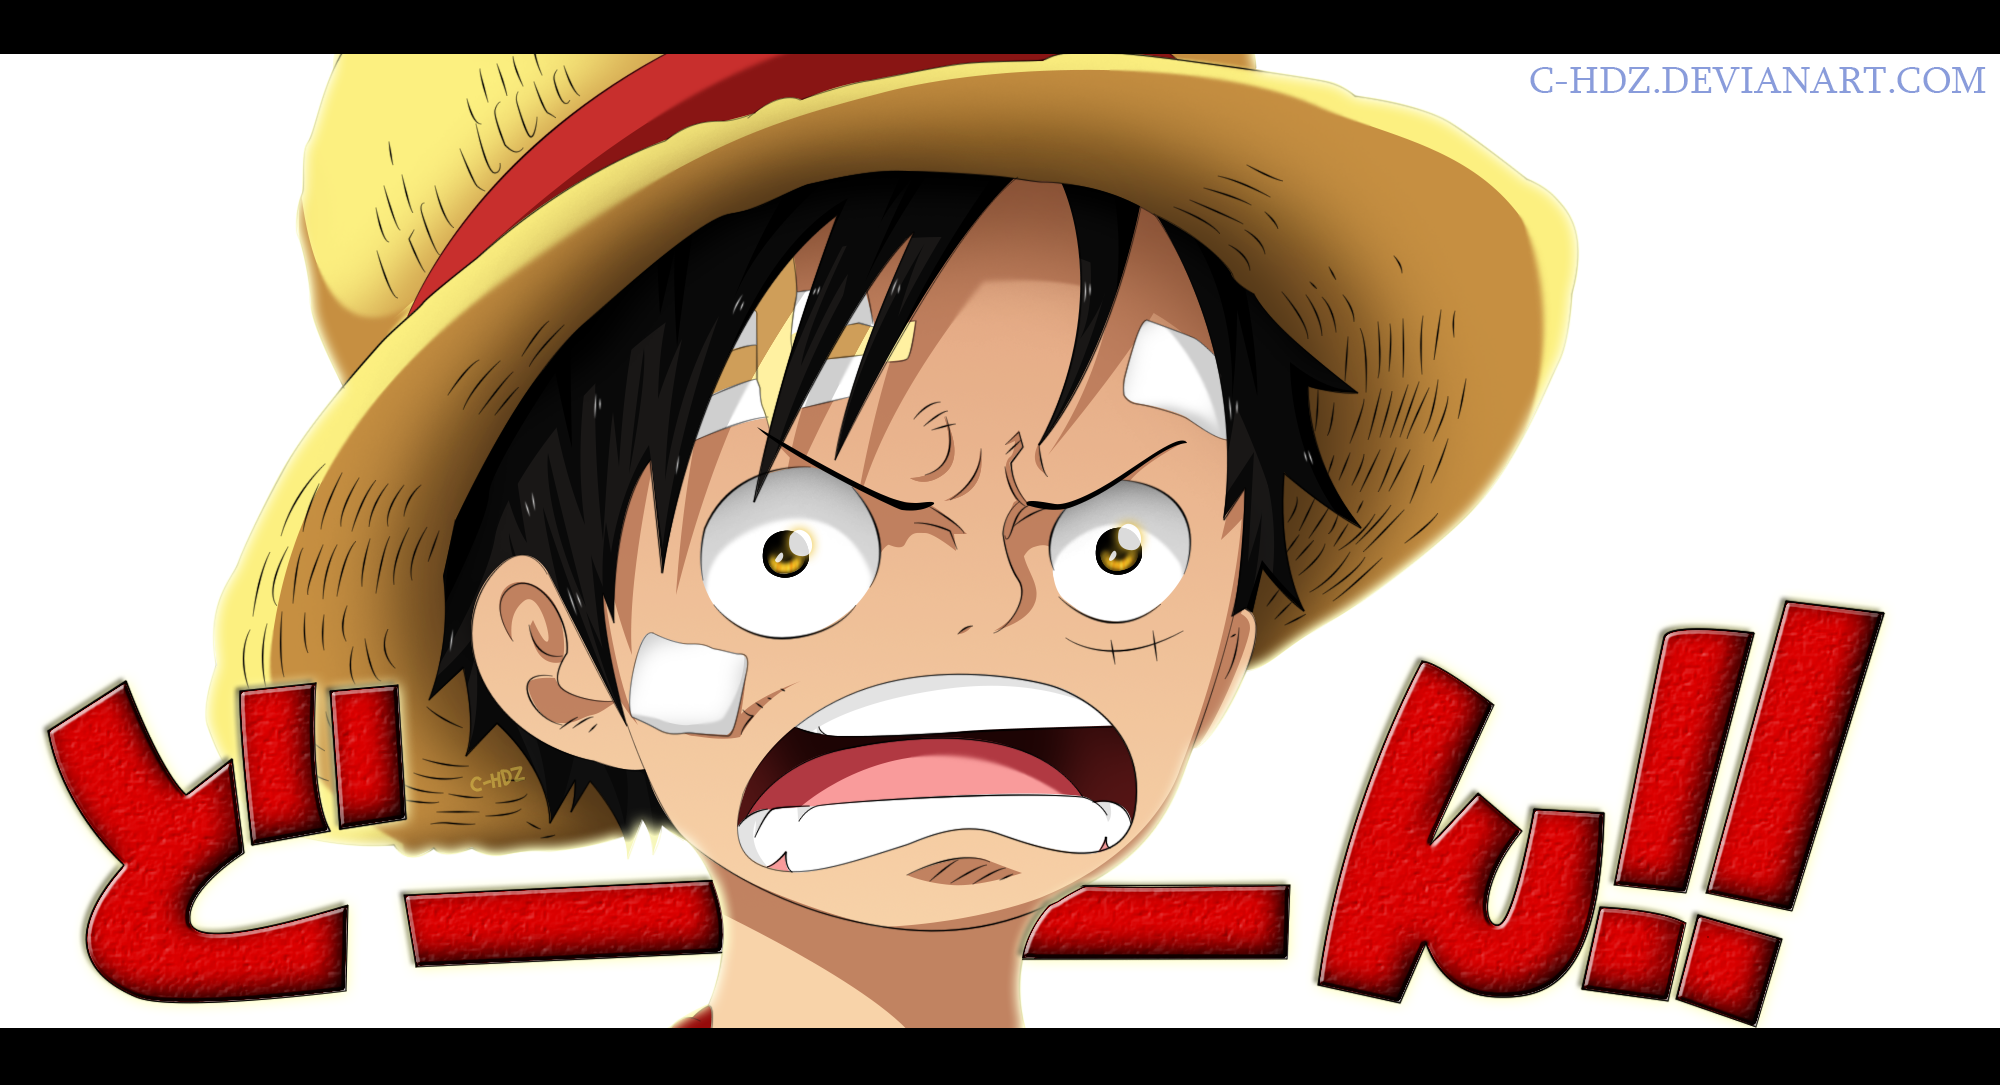 One Piece 800 Luffy By Mavishdz On Deviantart